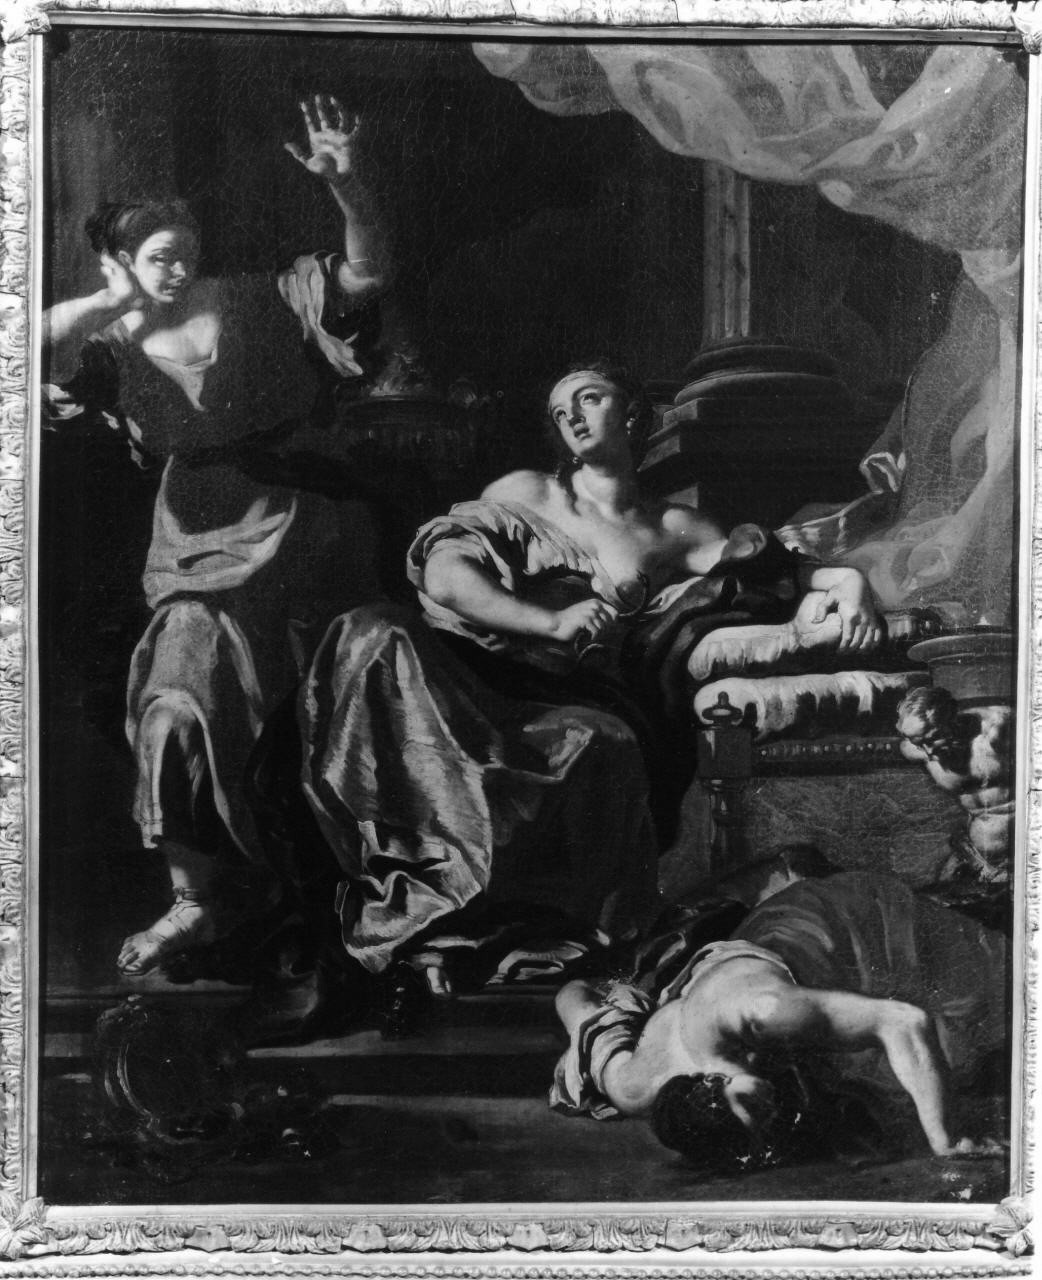 Cleopatra si fa pungere da aspidi (dipinto, insieme) di Solimena Francesco (secondo quarto sec. XVIII)